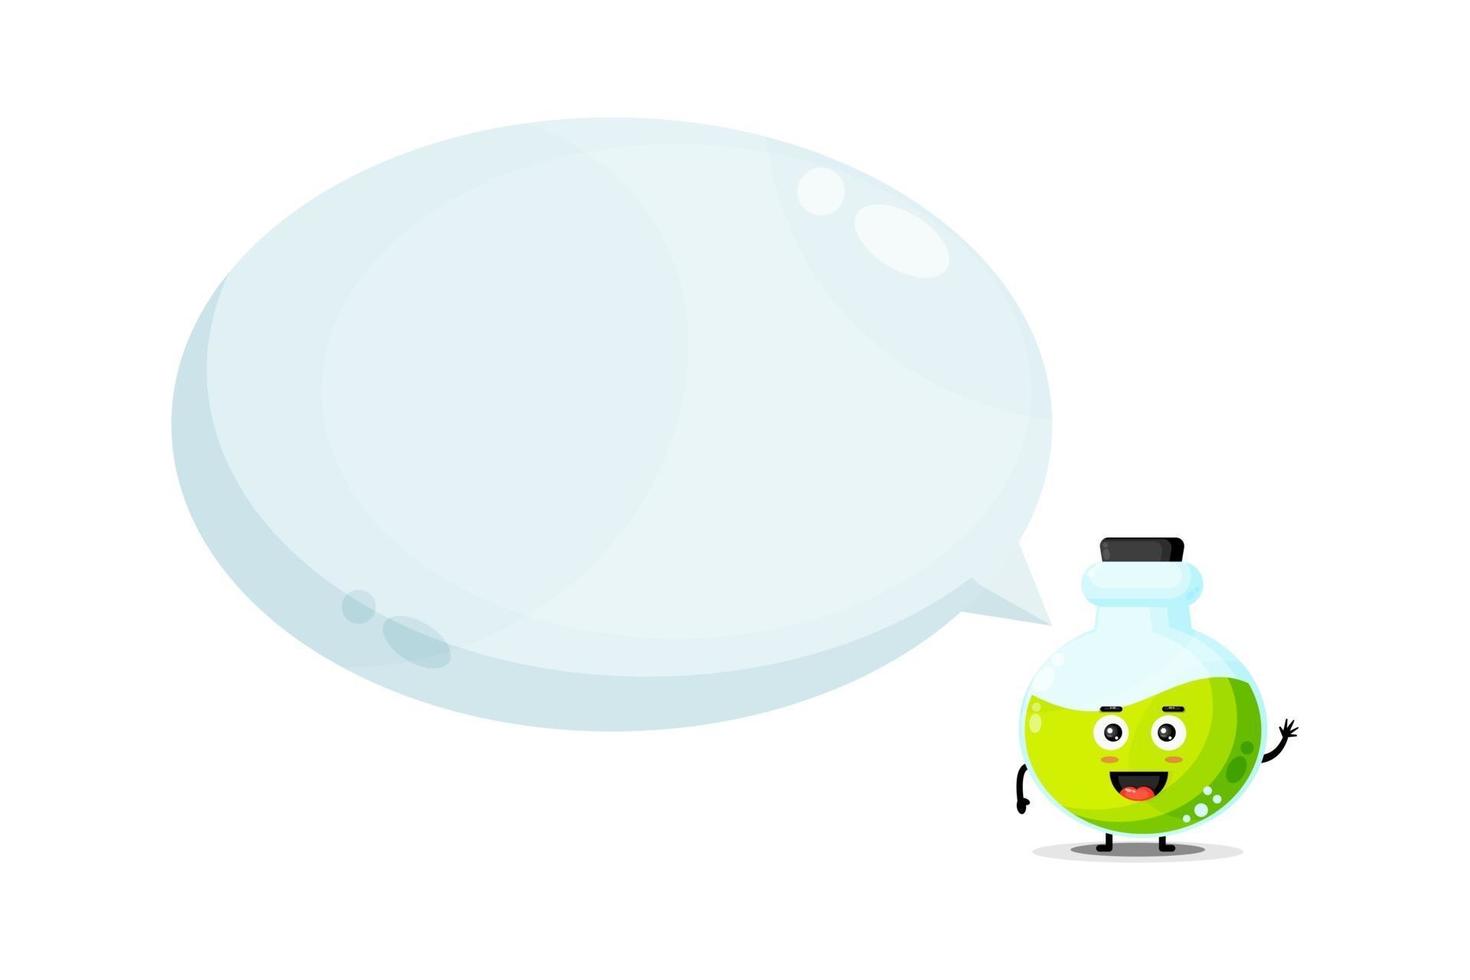 Cute potion bottle mascot with bubble speech vector